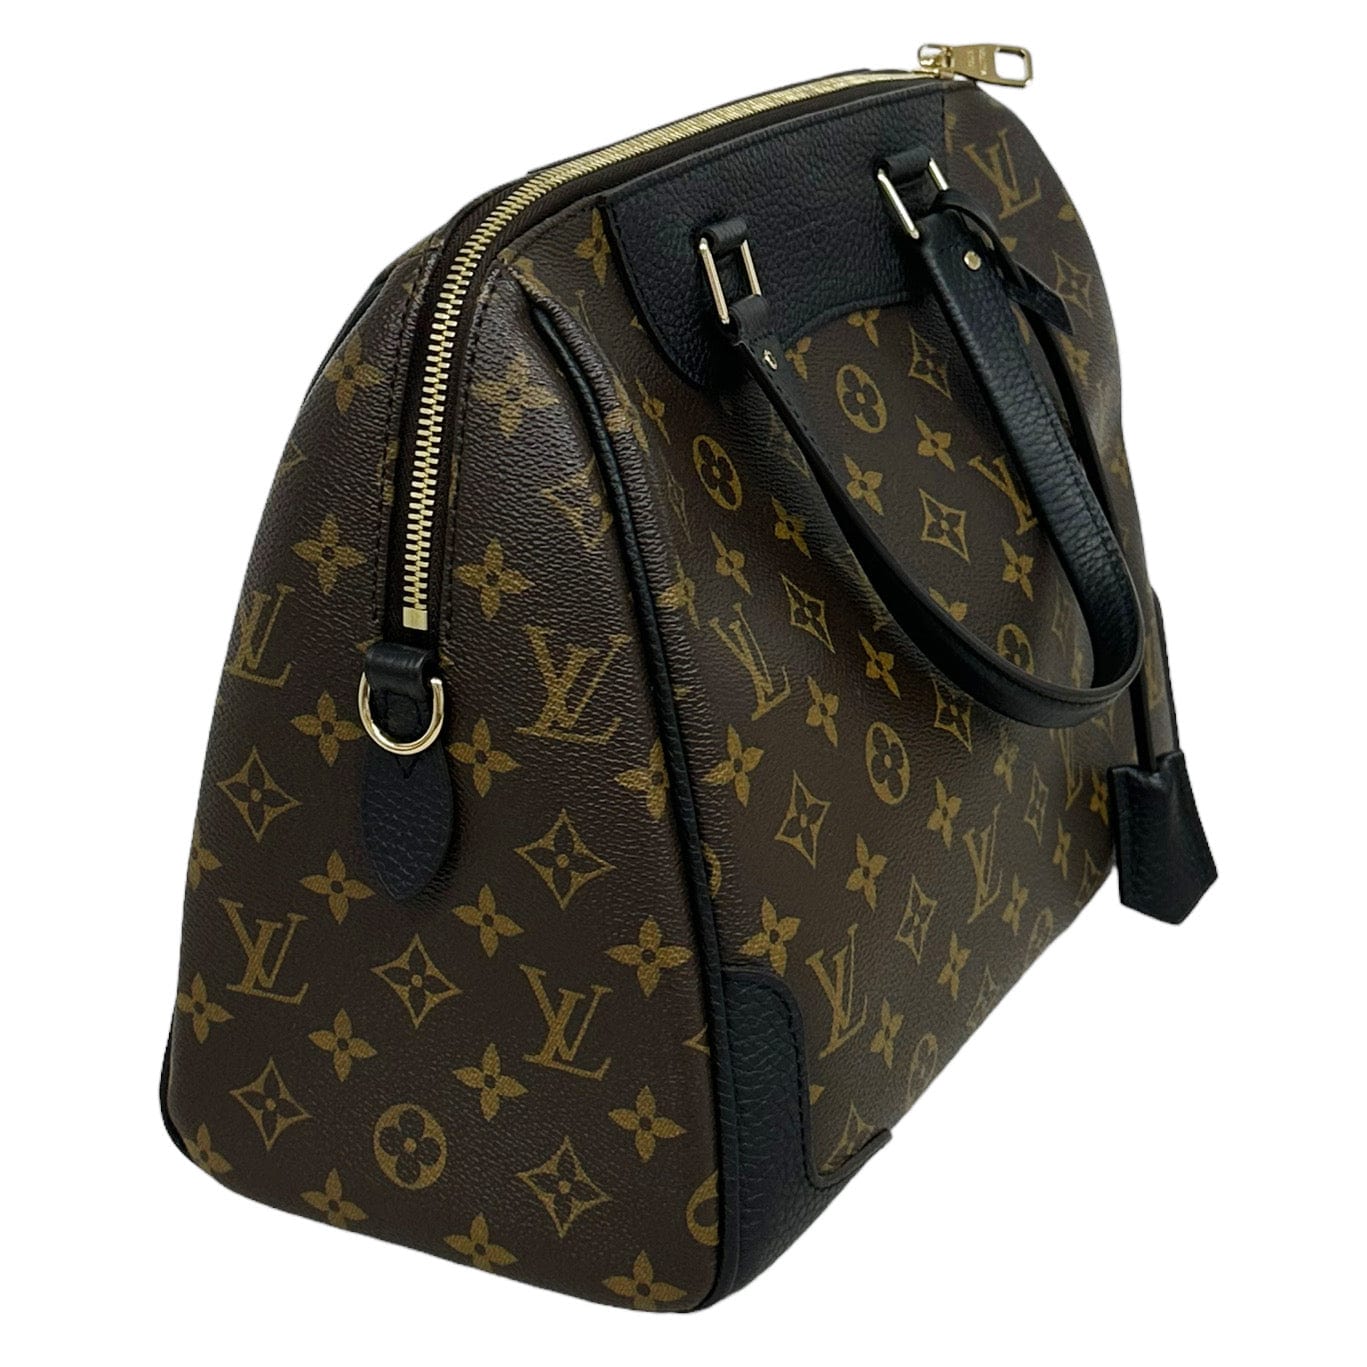 louis vuitton handbags for women clearance sale crossbody